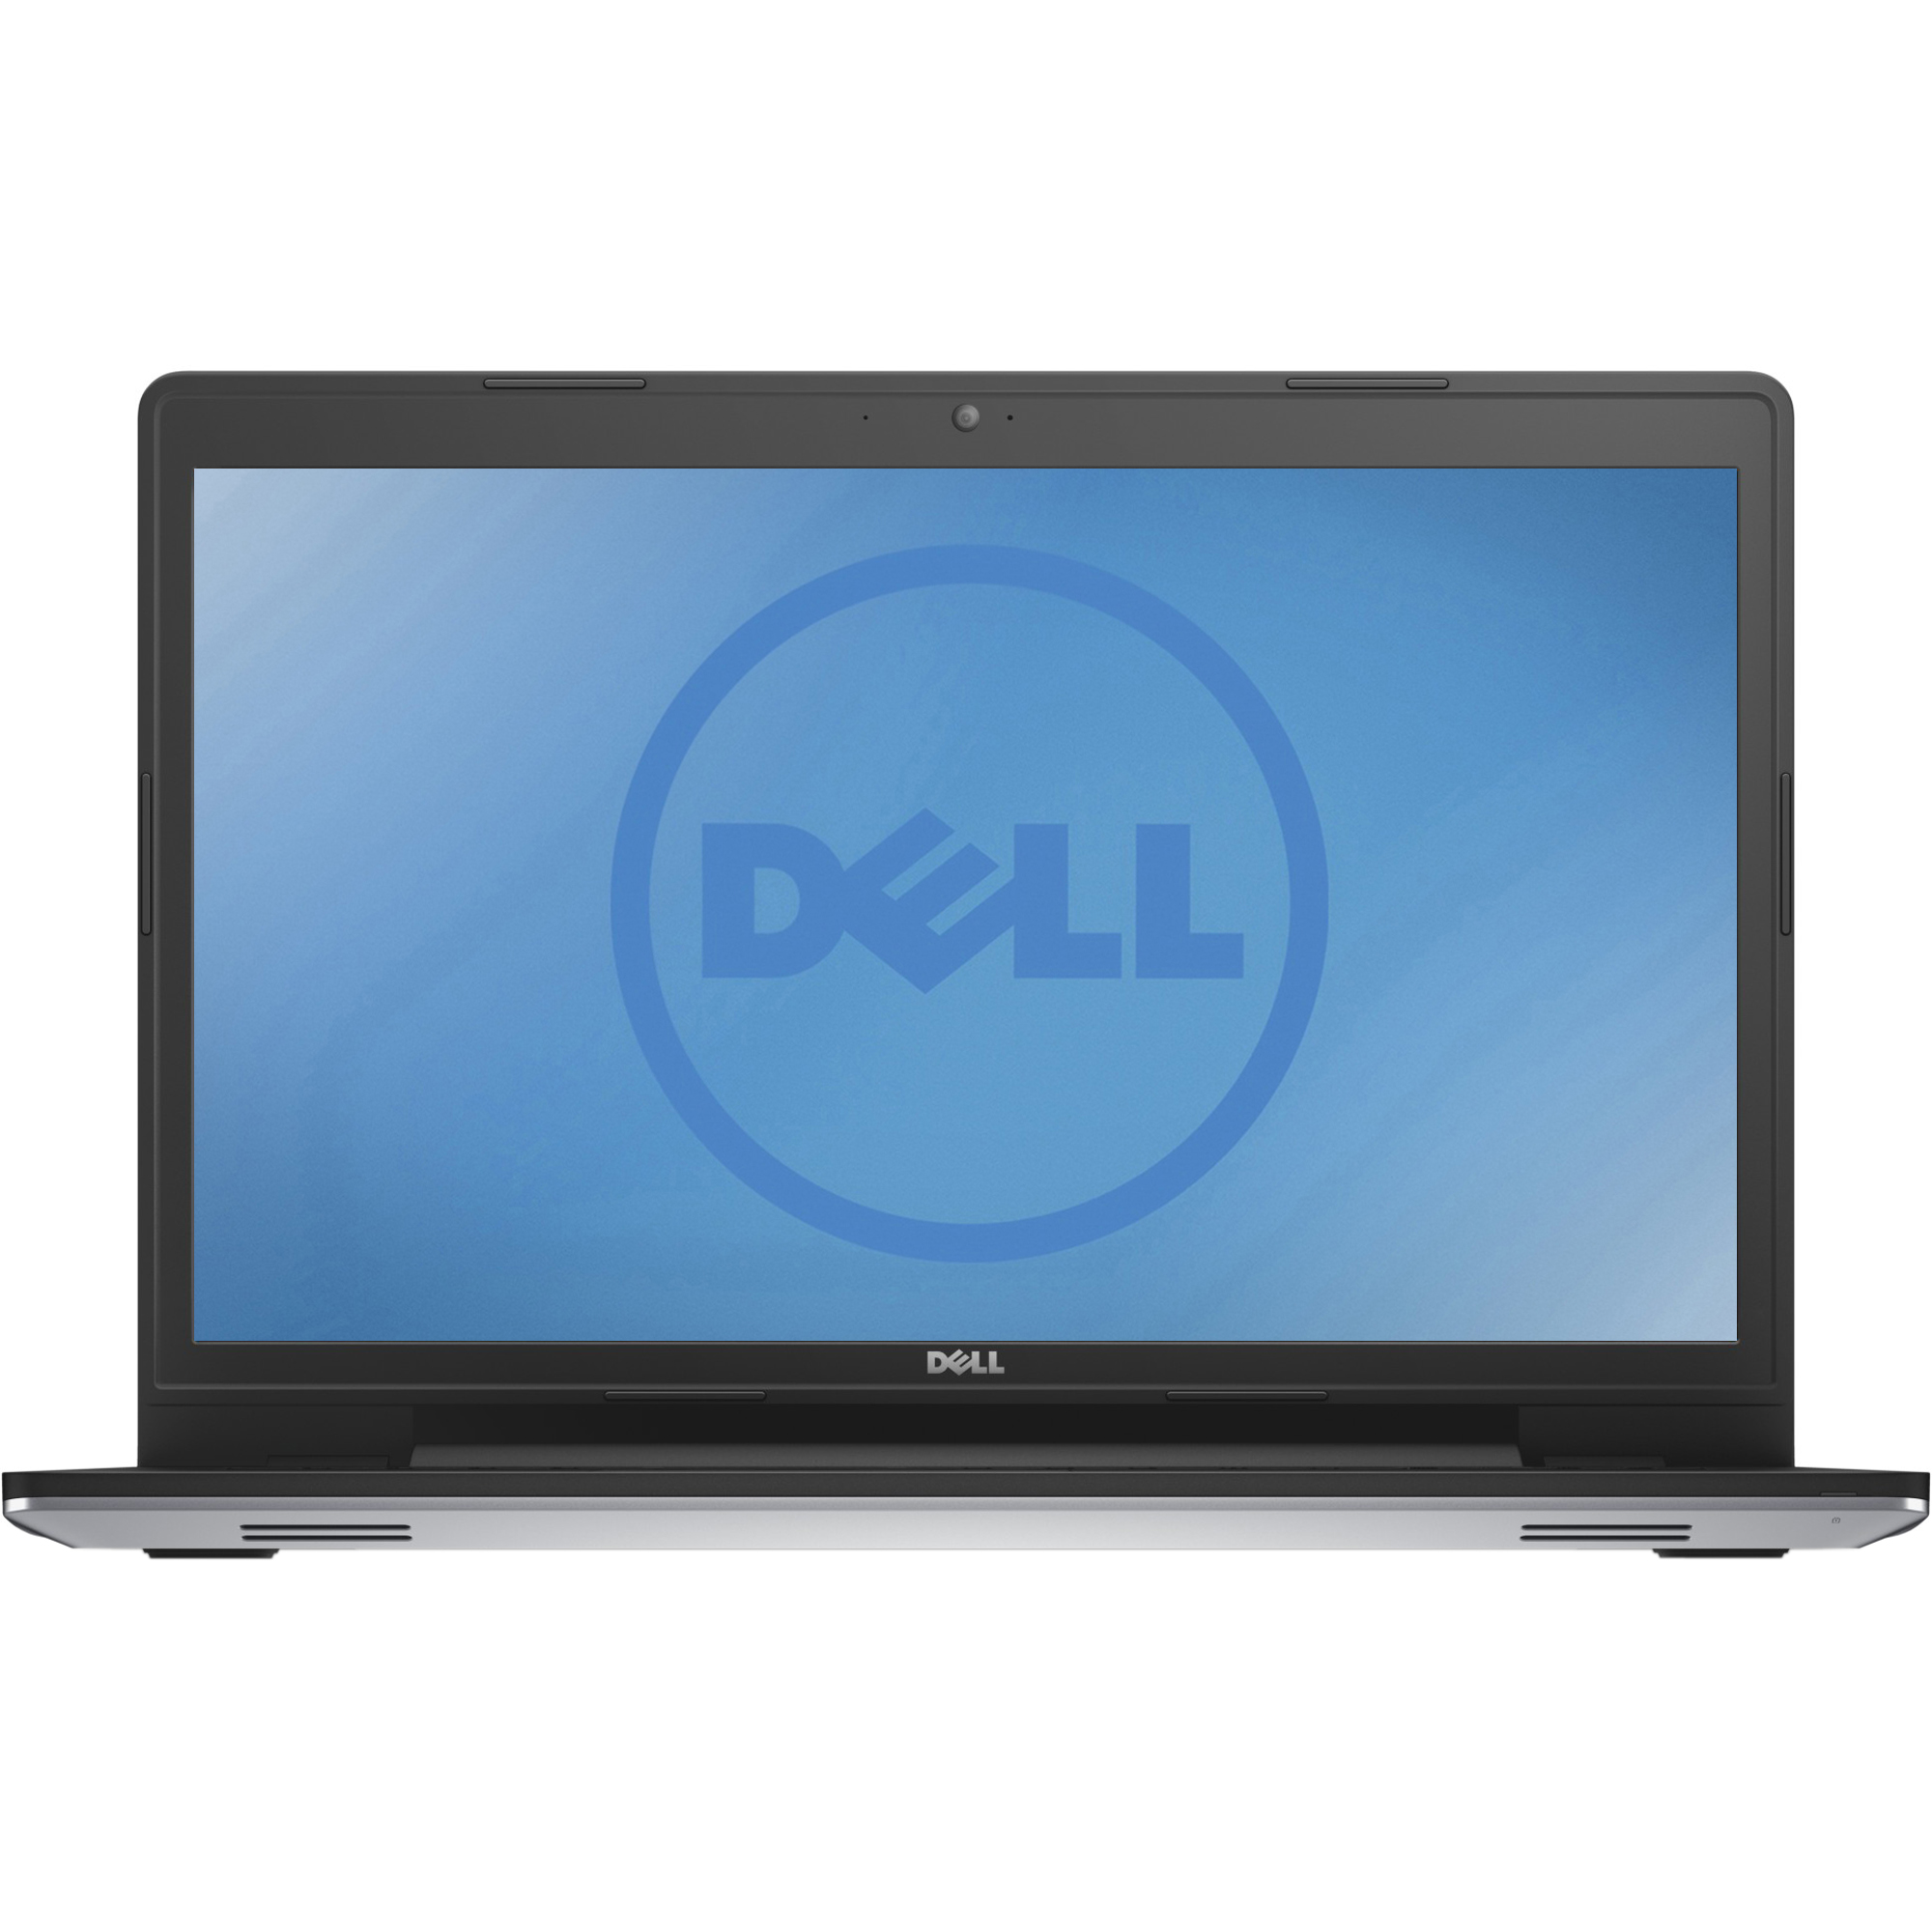  Laptop Dell Inspiron 5749, Intel Core i3-5005U, 4GB DDR3, HDD 500GB, nVidia GeForce 820M 2GB, Linux 